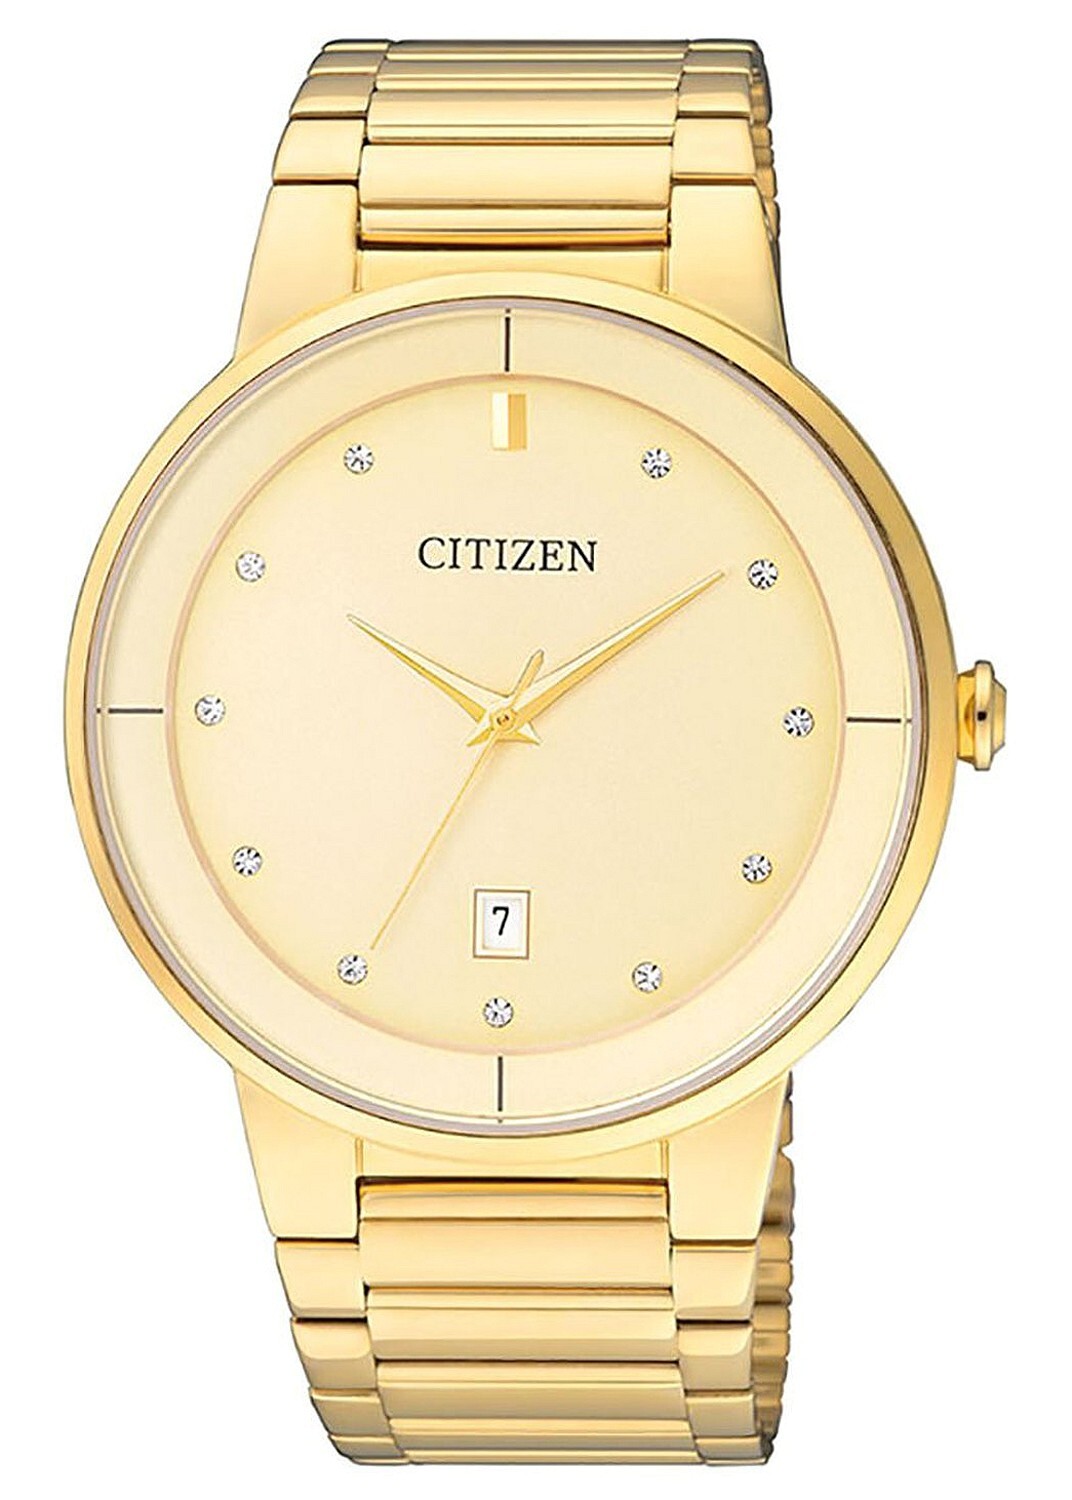 Đồng hồ nam Citizen BI5012-53P